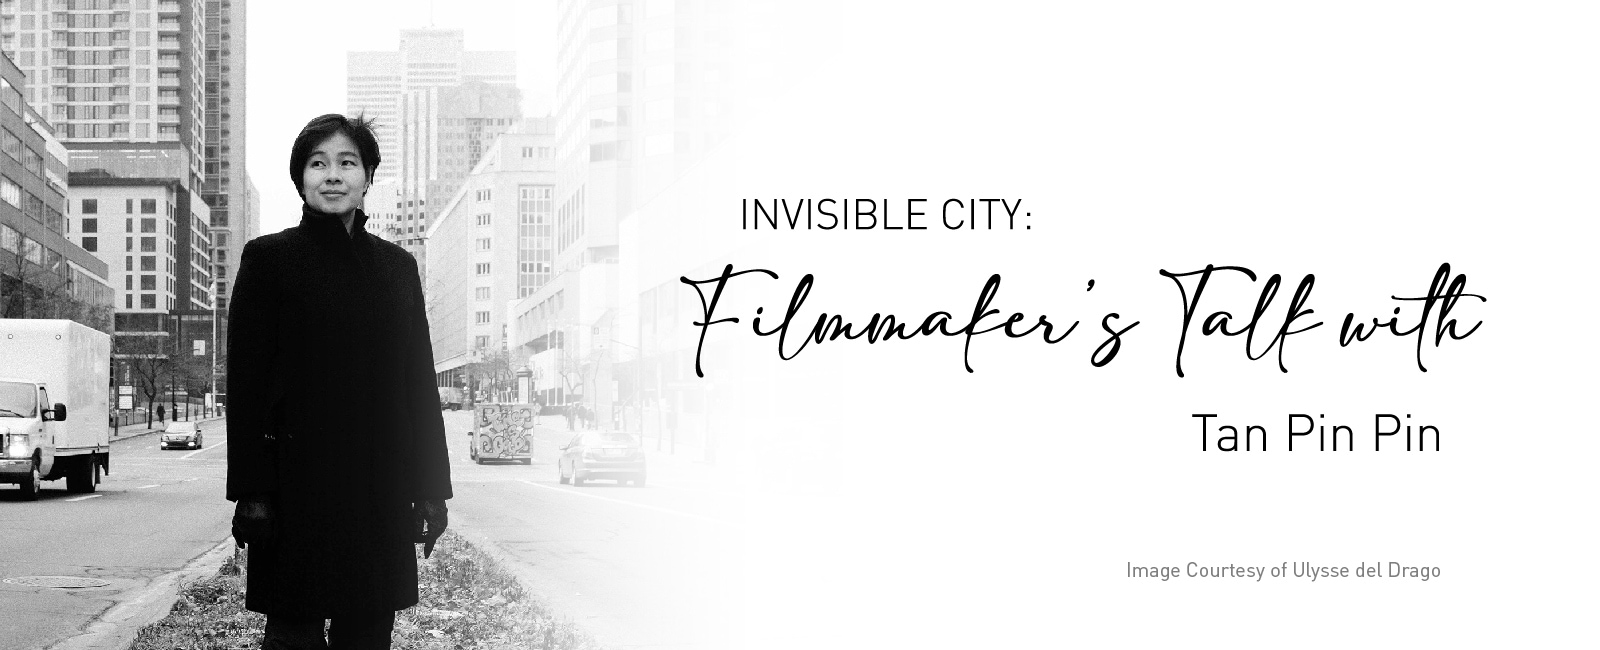 Invisible City: Filmmaker’s Talk with Tan Pin Pin